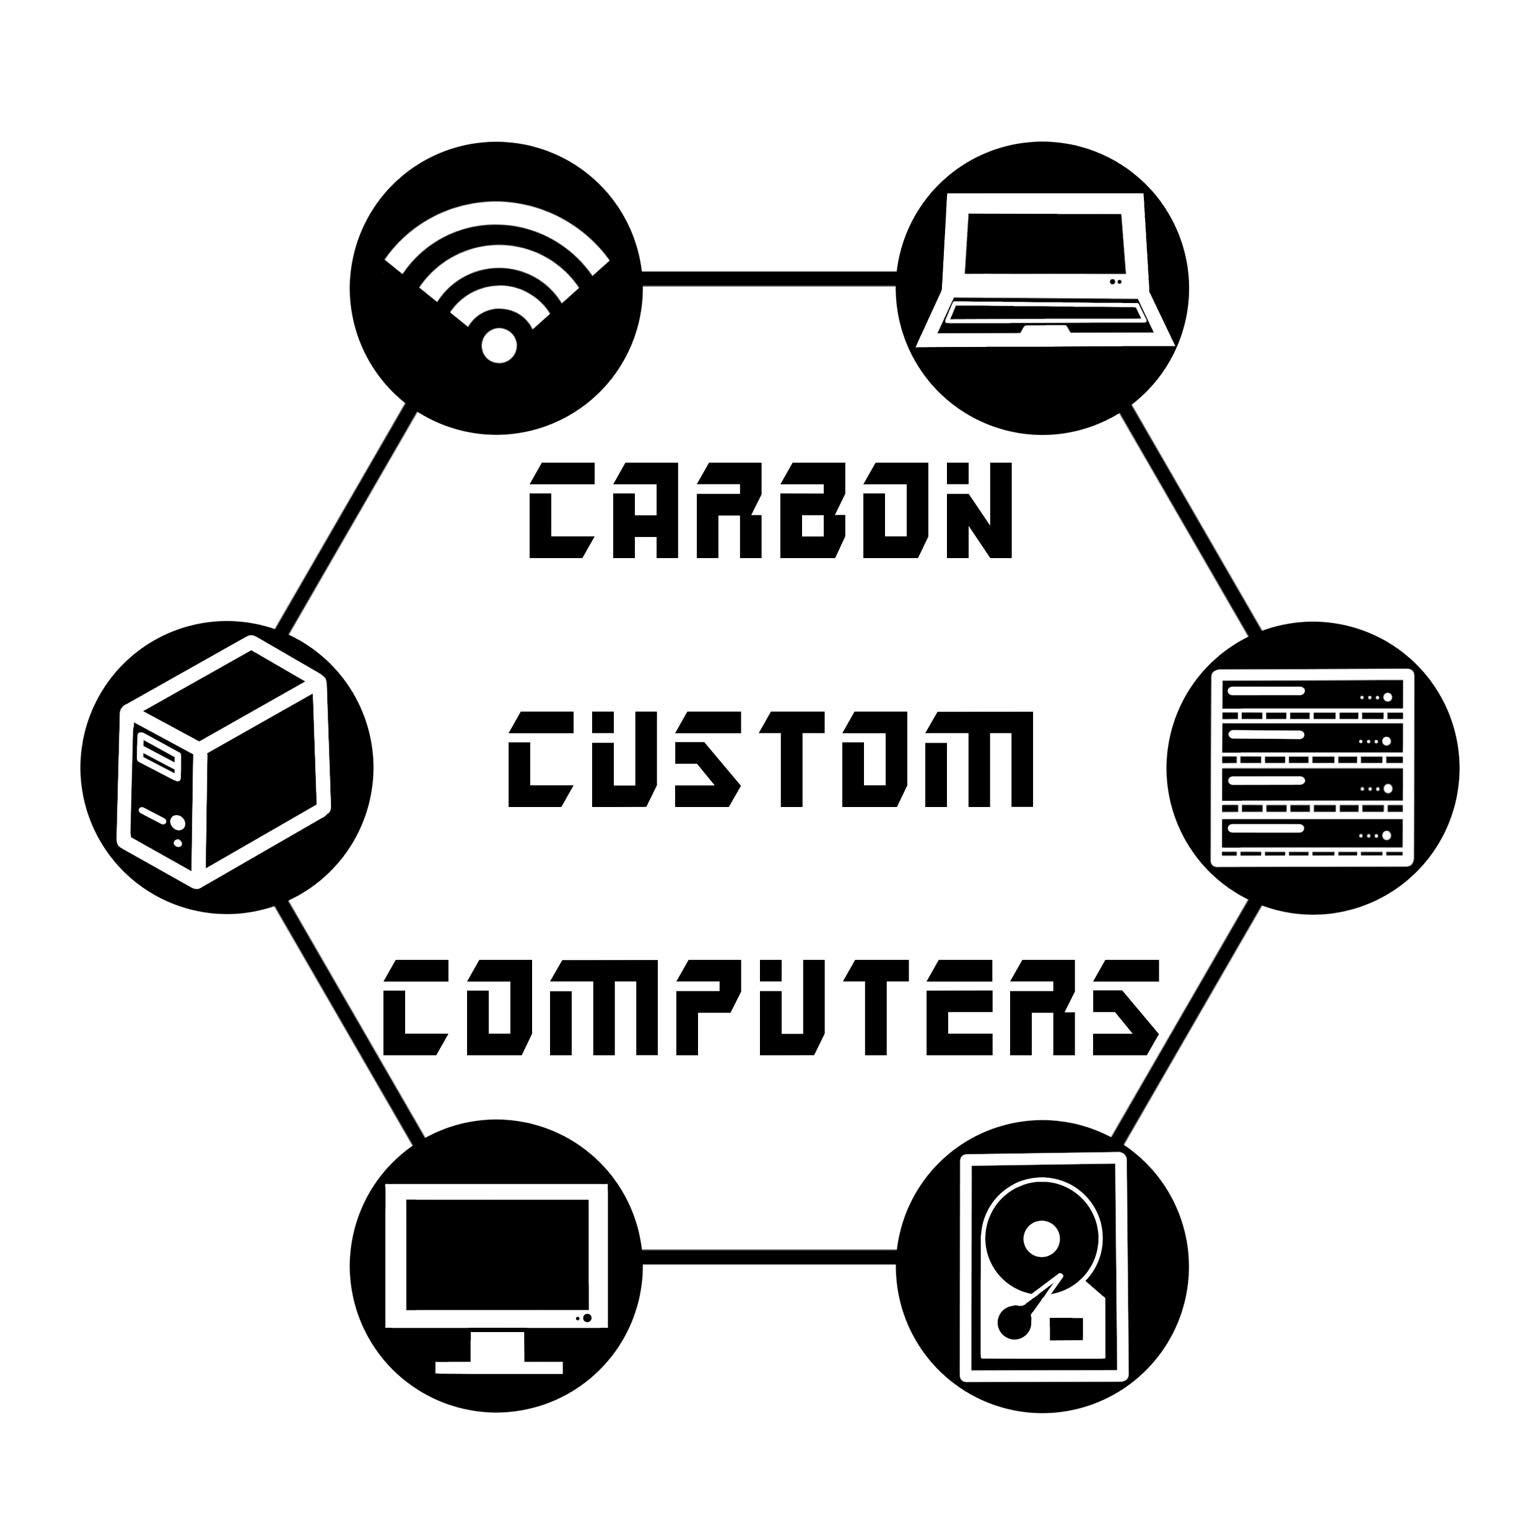 Carbon Custom Computers - 031822-01